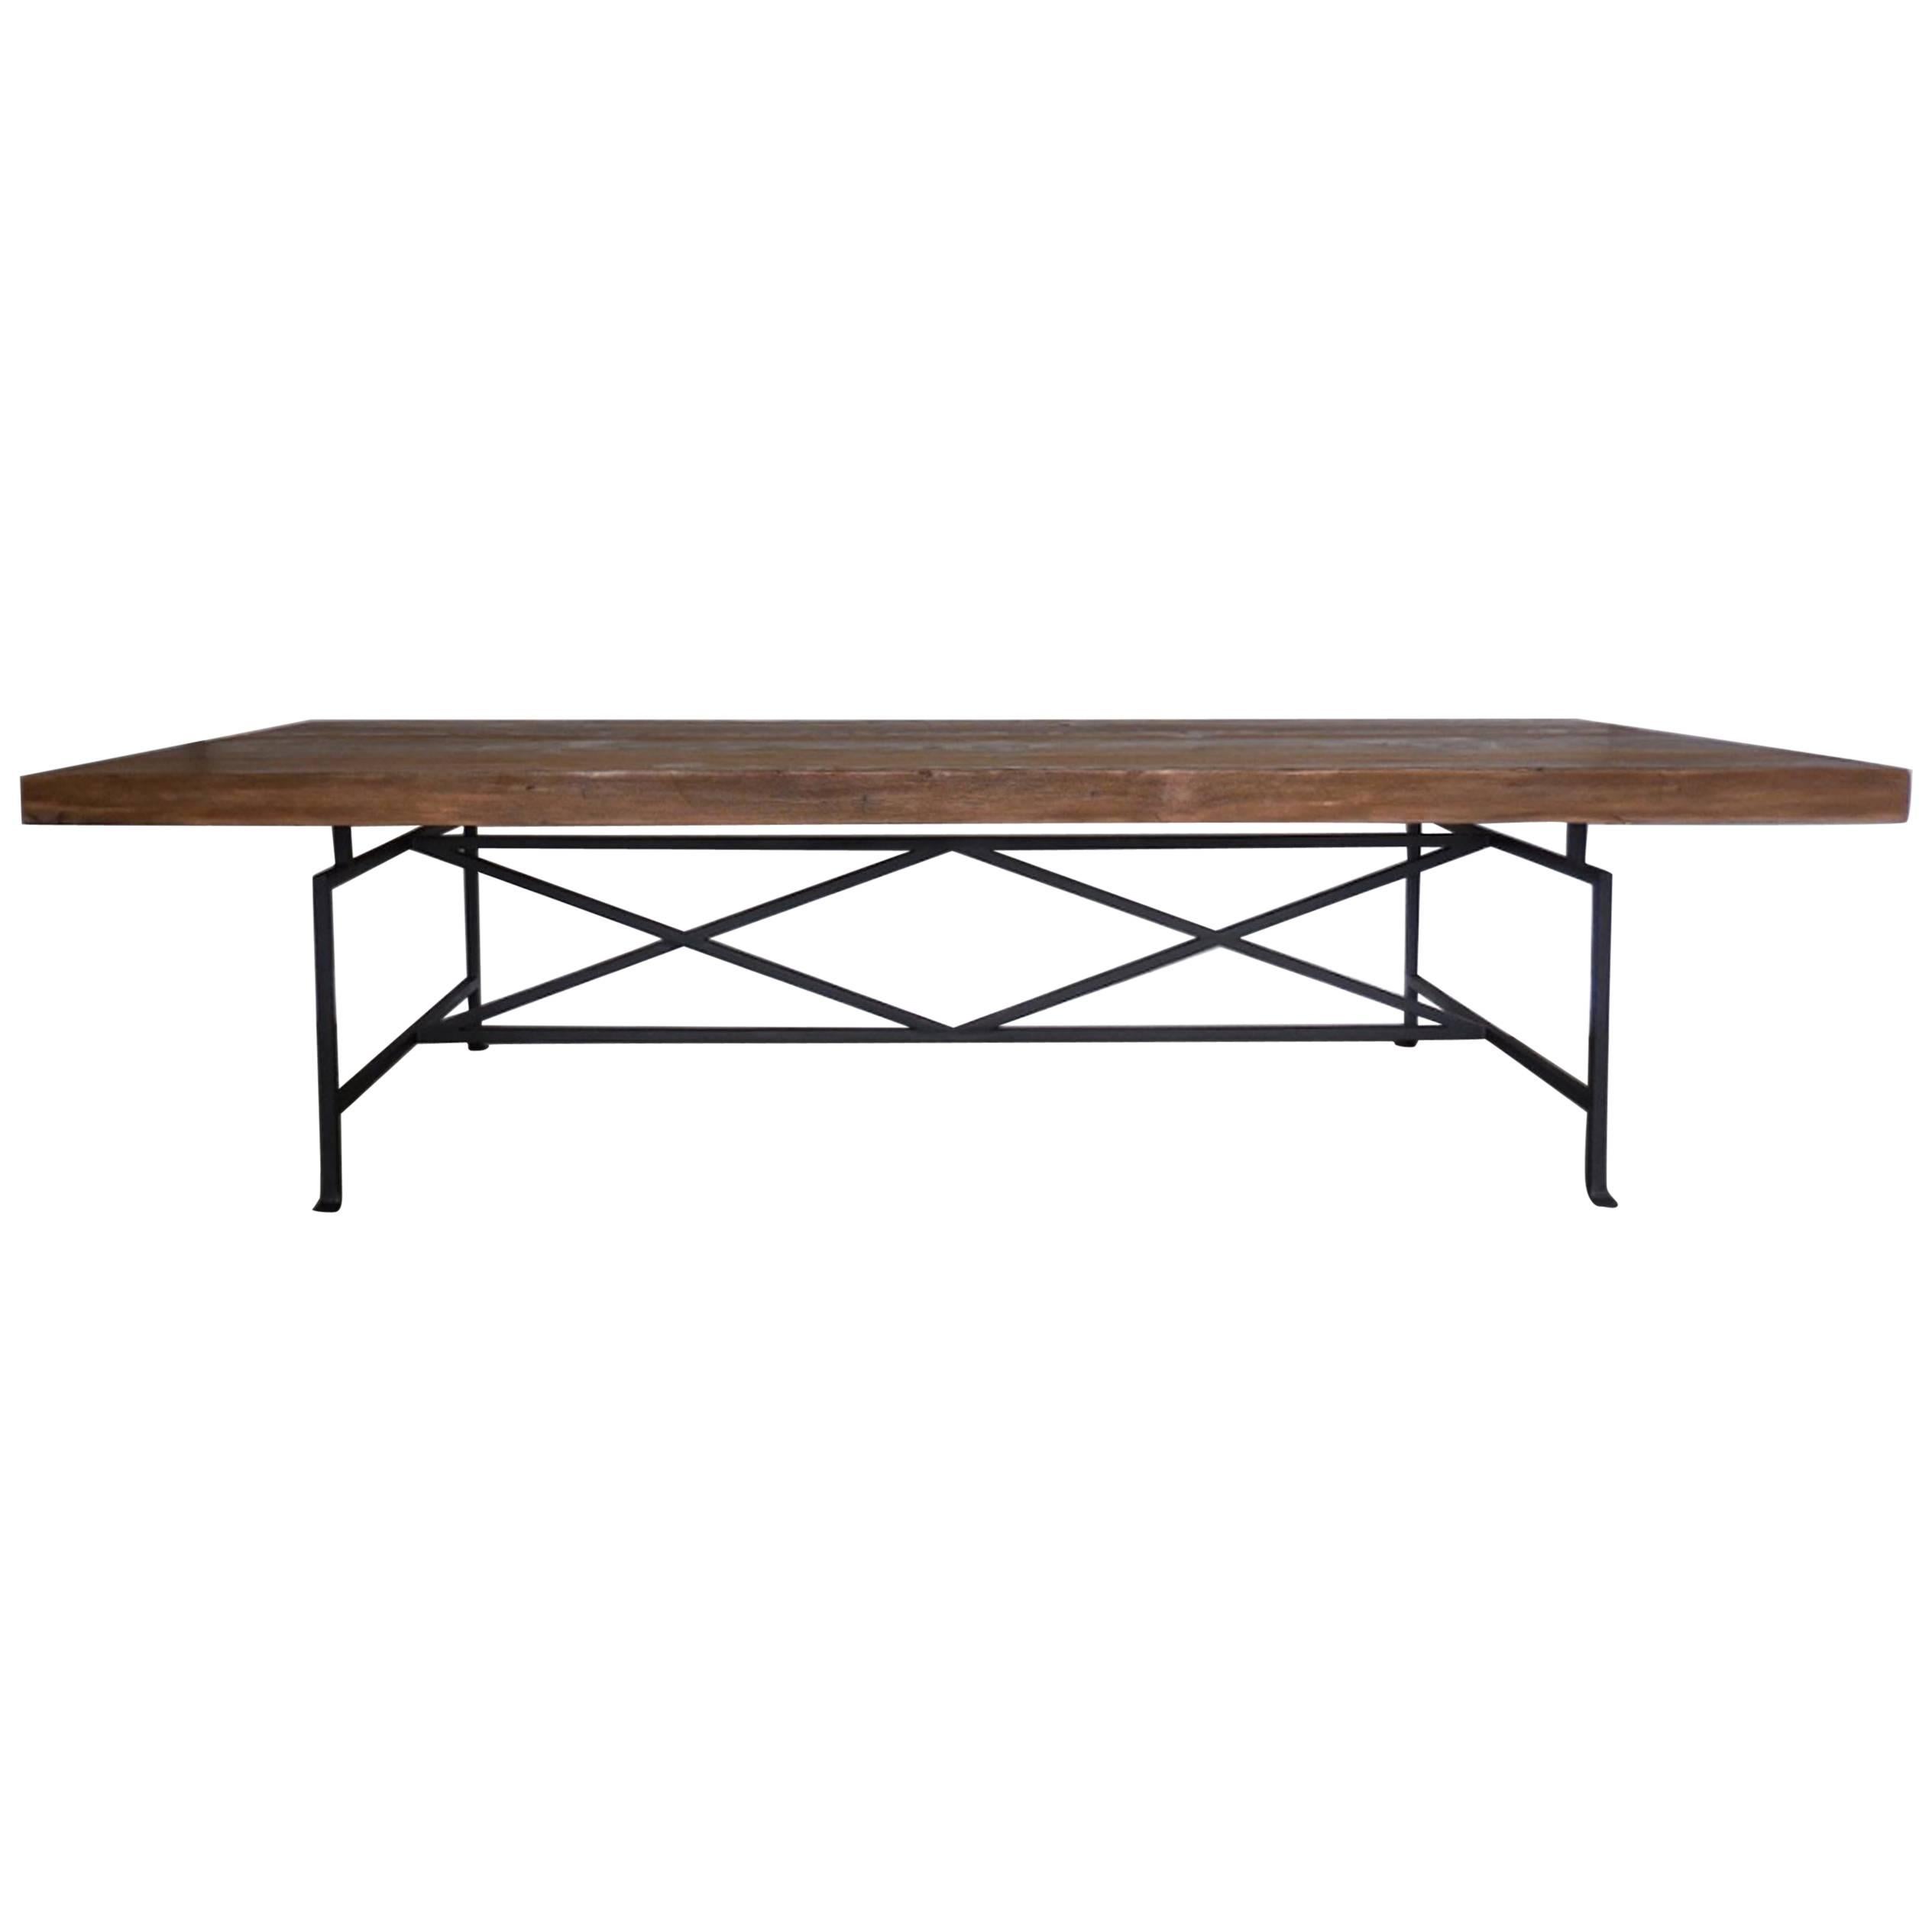 Custom Douglas Fir Wood Table with Iron Base by Dos Gallos Studio